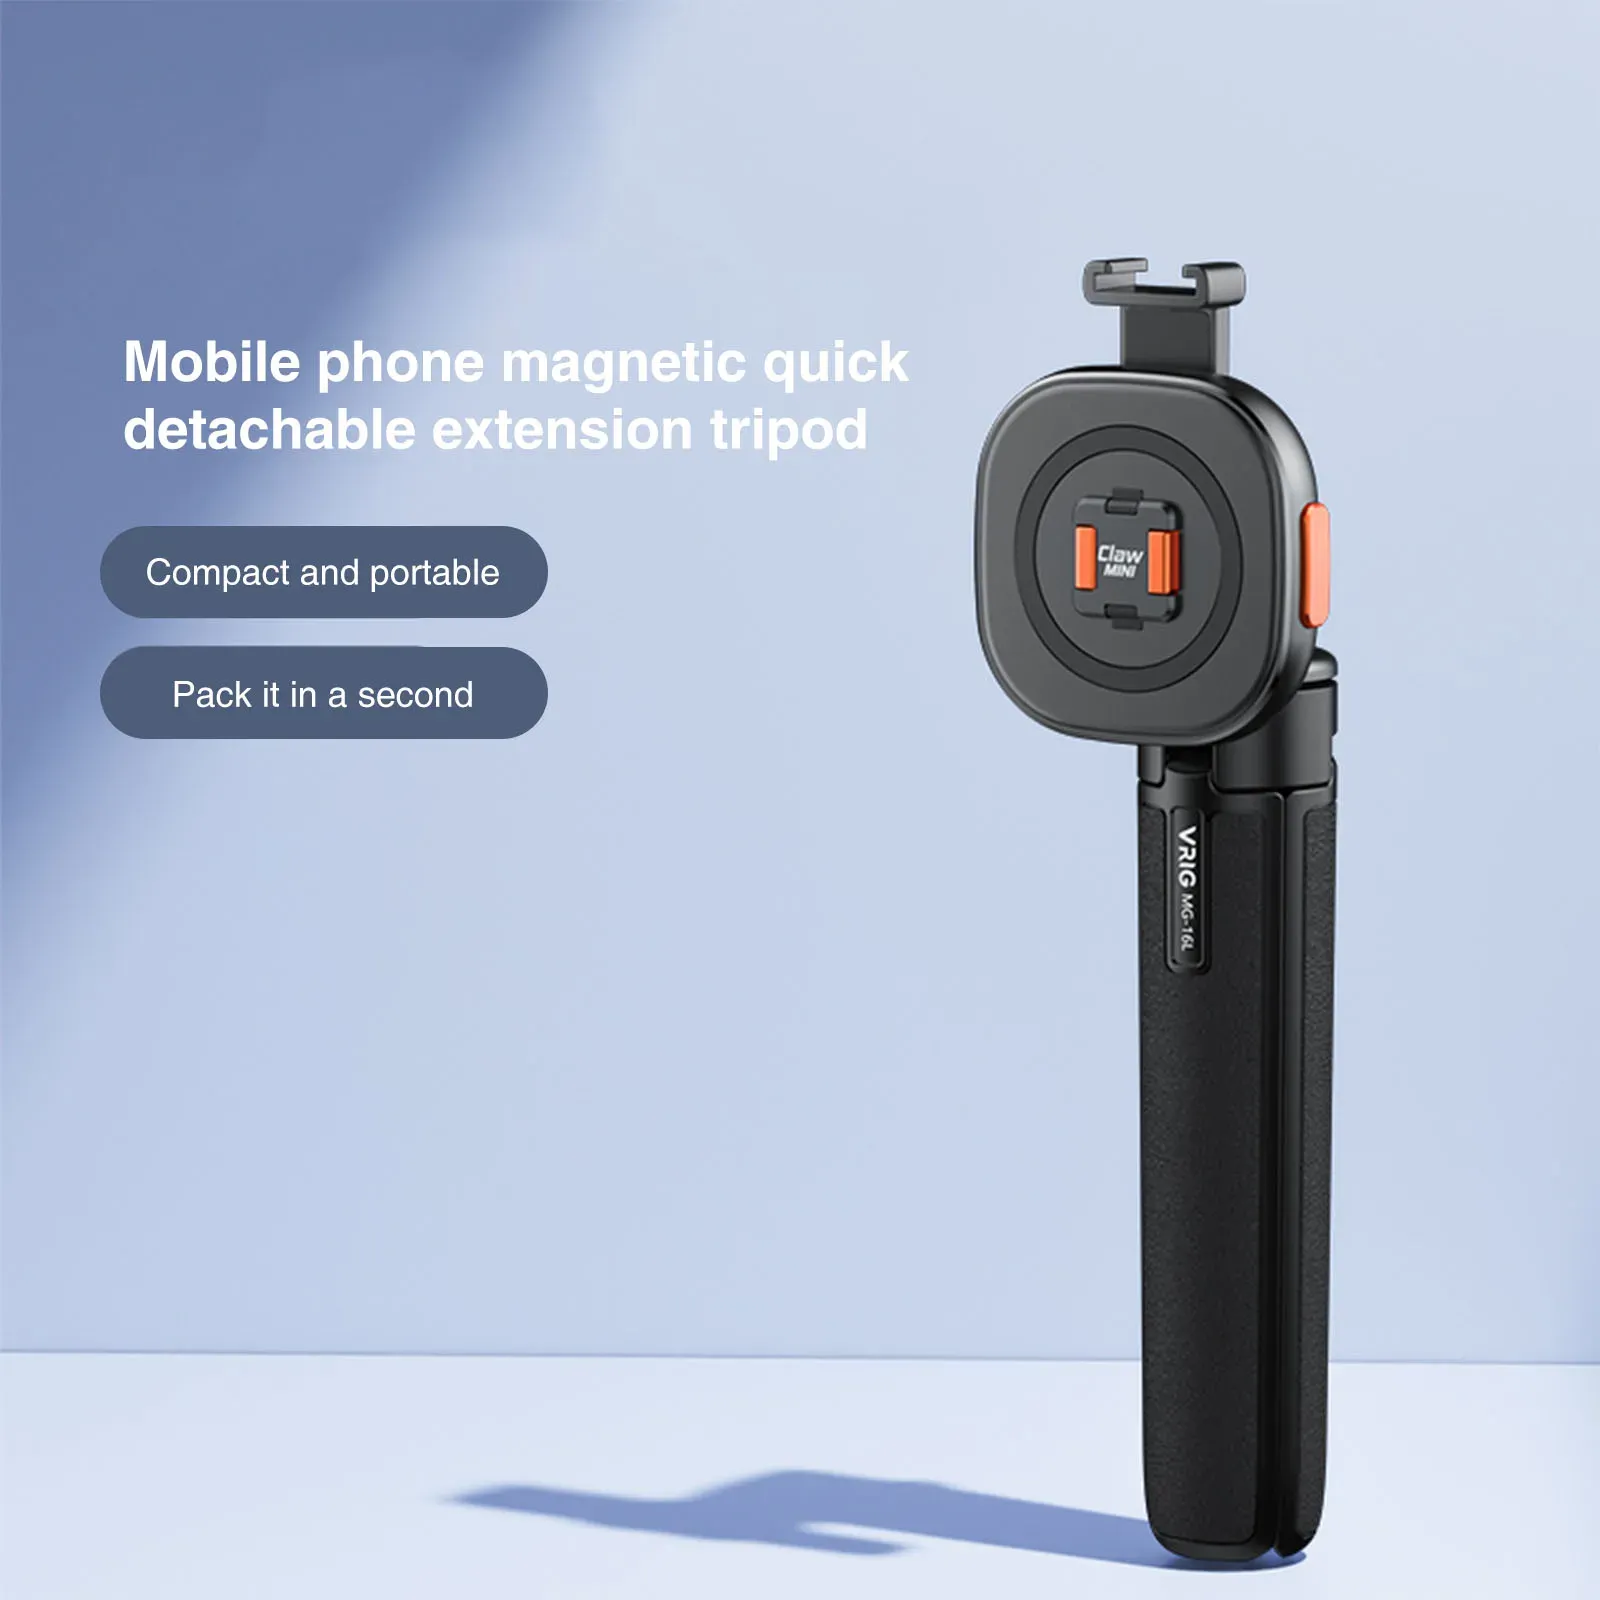 Tripods urigrig Vrig Mg16l Magnetic Selfie Stick Stativ für Mobiltelefon Schnellverkaufsstand Mini Live Vlog erweitertes Tripod